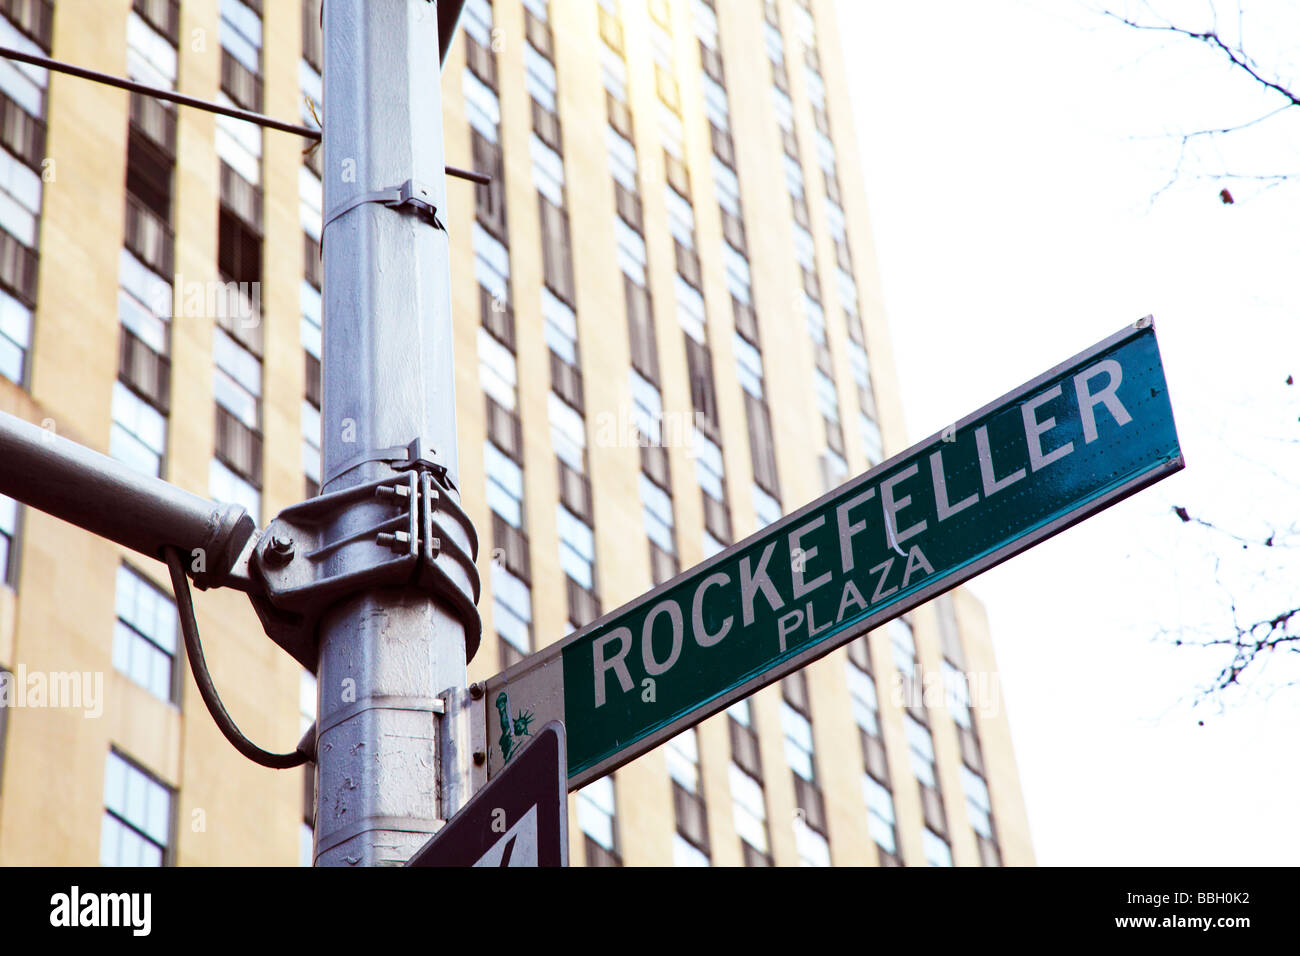 Rockefeller Plaza street sign Stock Photo